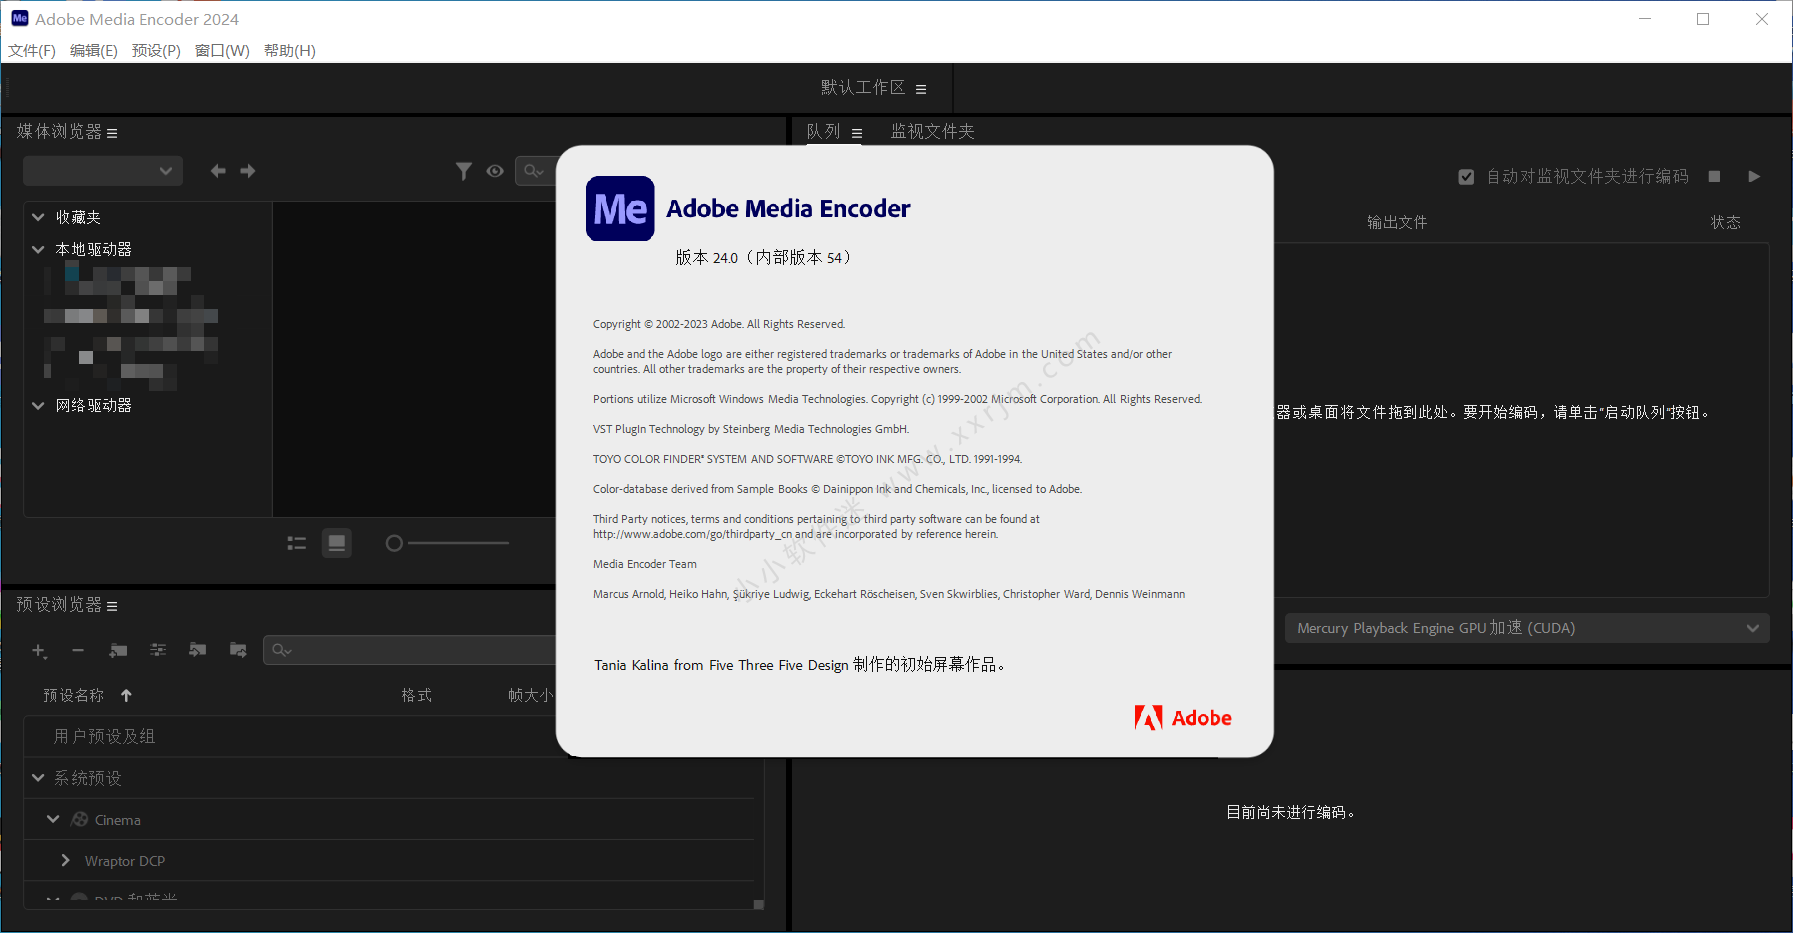 Adobe Media Encoder 2024 v24.0.0.54 instal the new version for mac